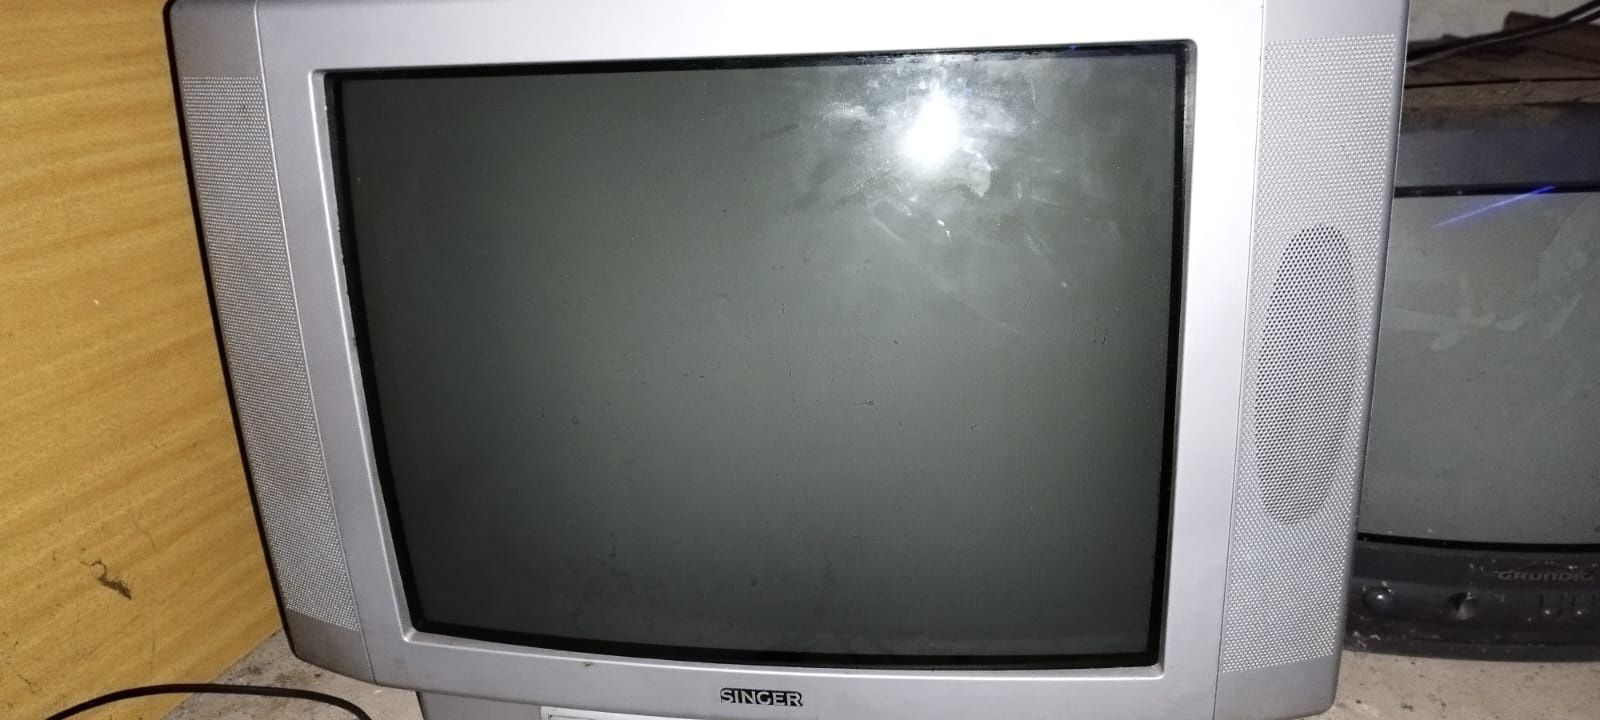 3 tvs das antigas/funcionais